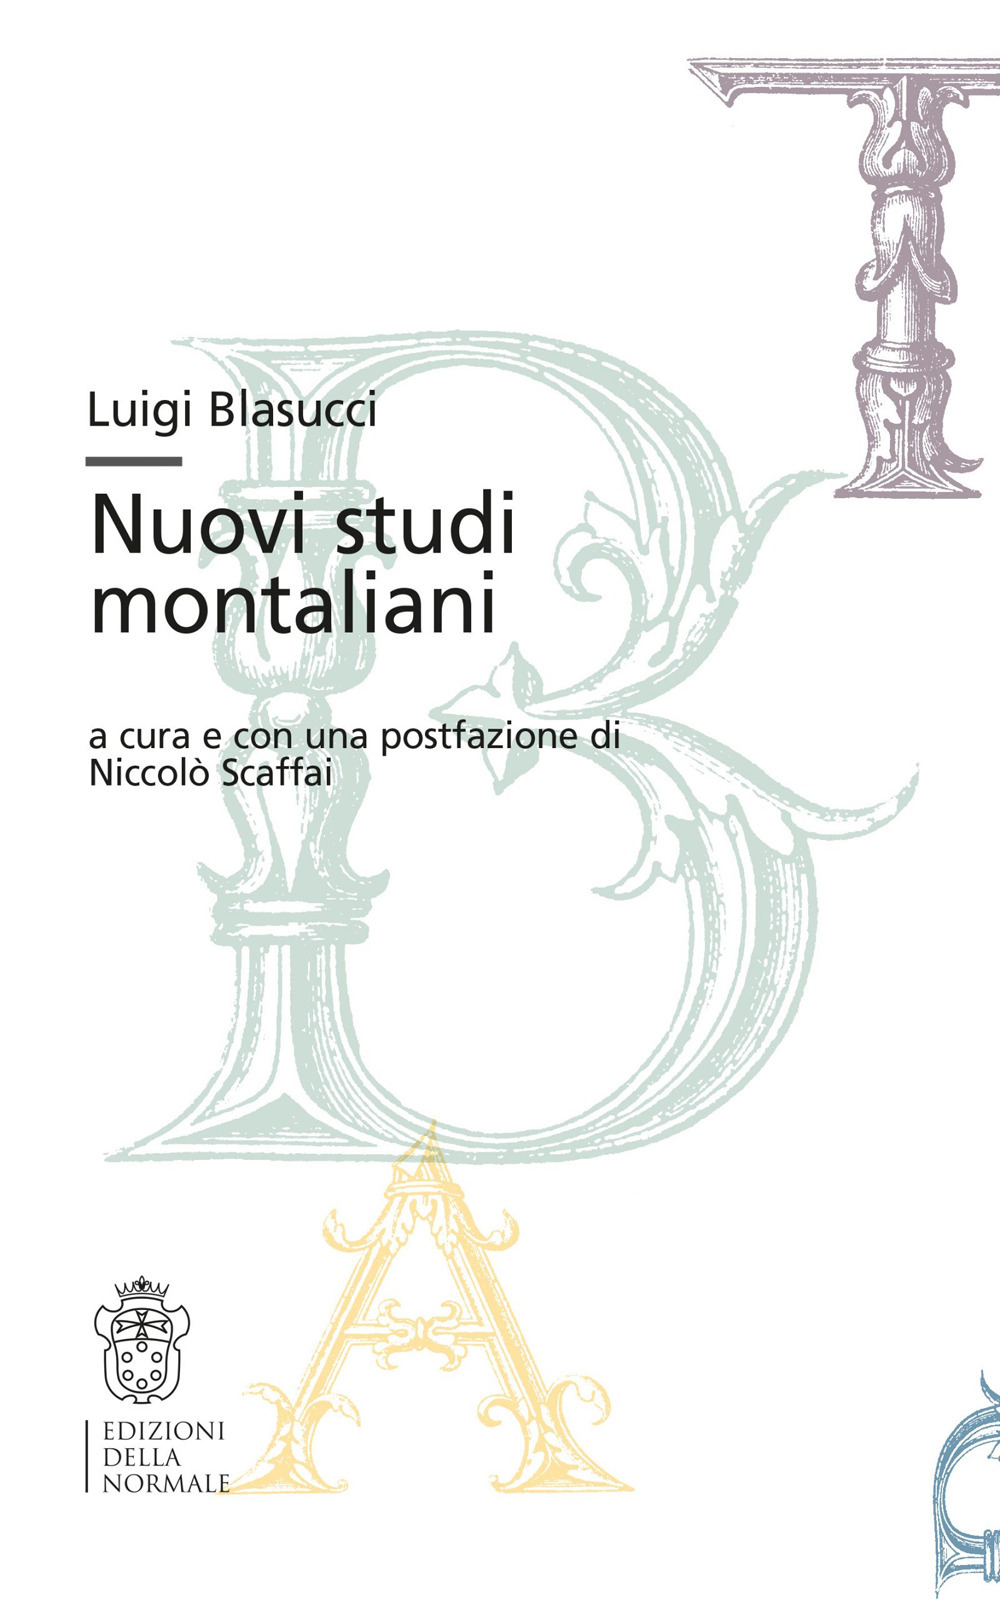 Luigi Blasucci. Nuovi studi montaliani